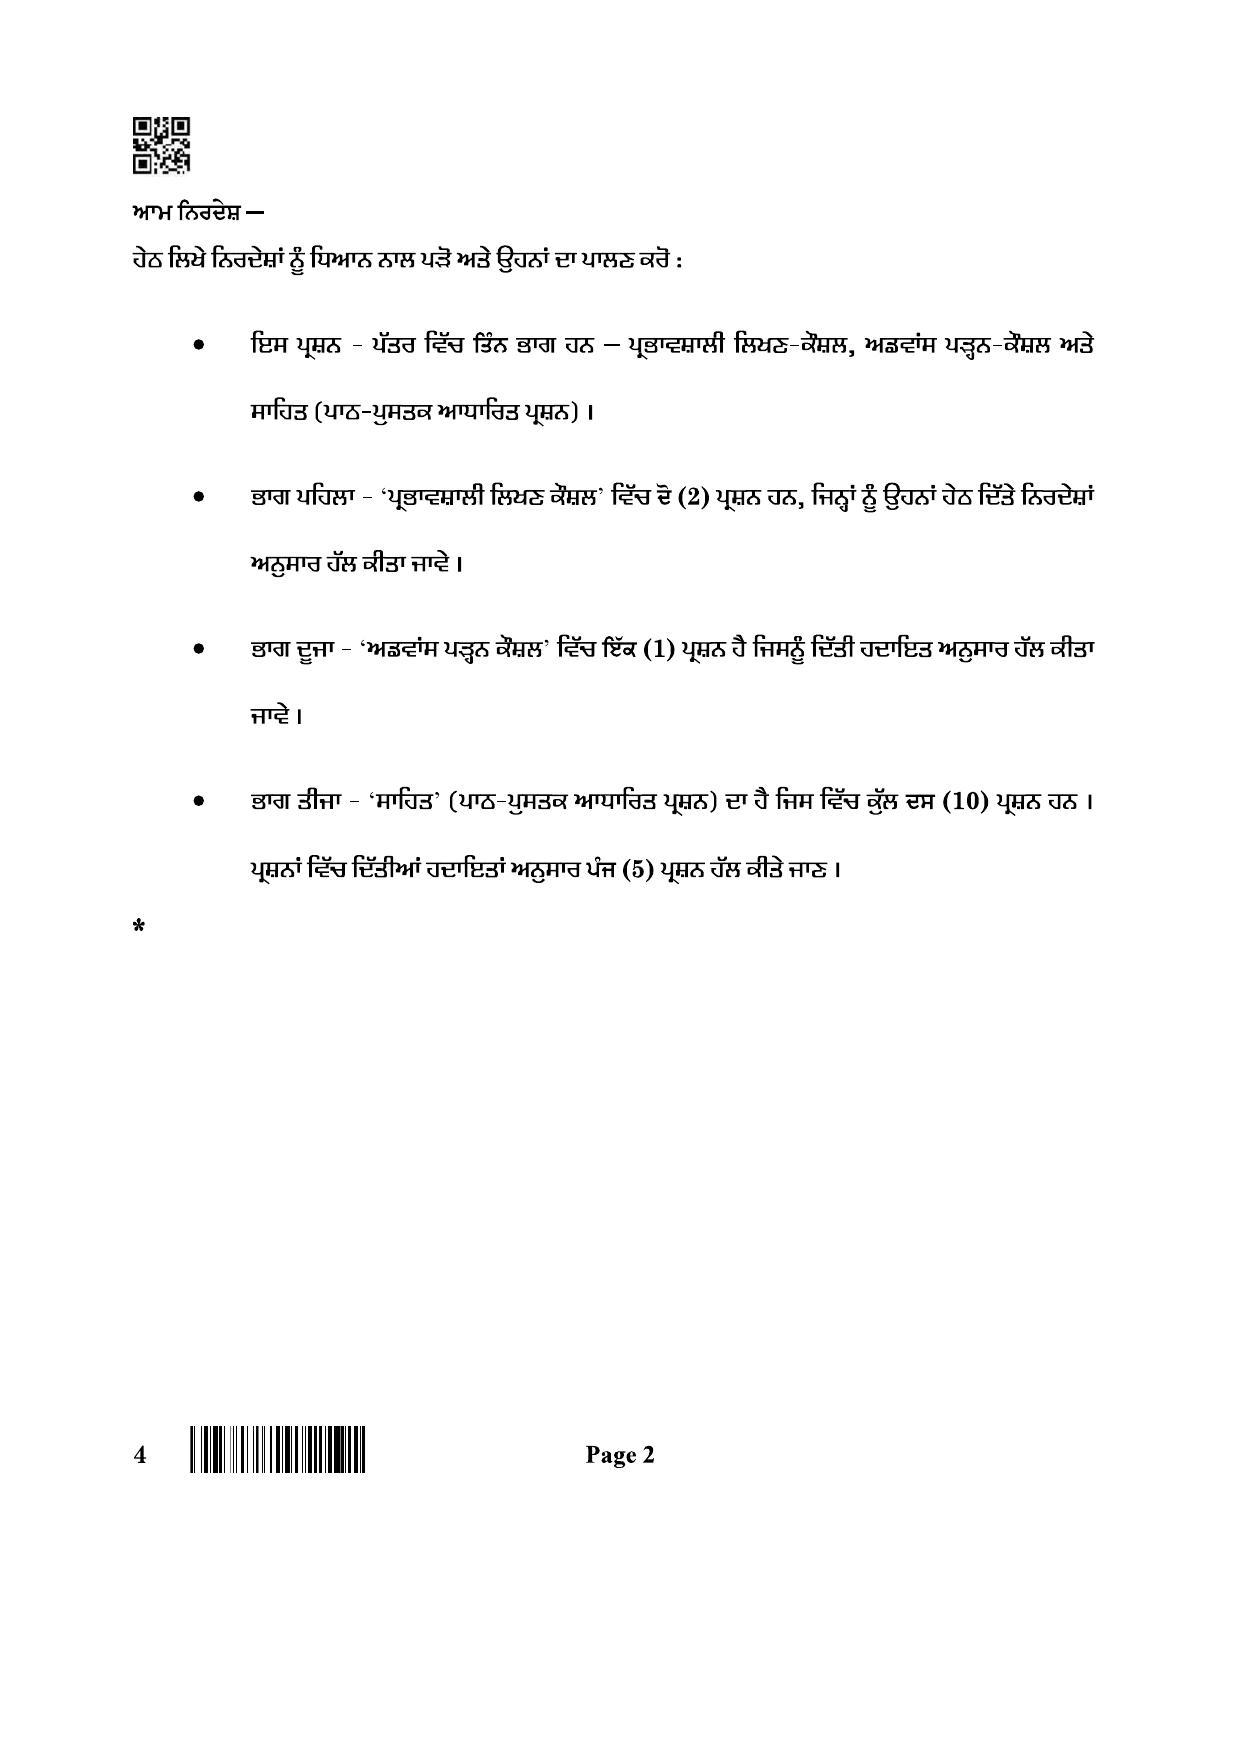 CBSE Class 12 4_Punjabi 2022 Question Paper - Page 2